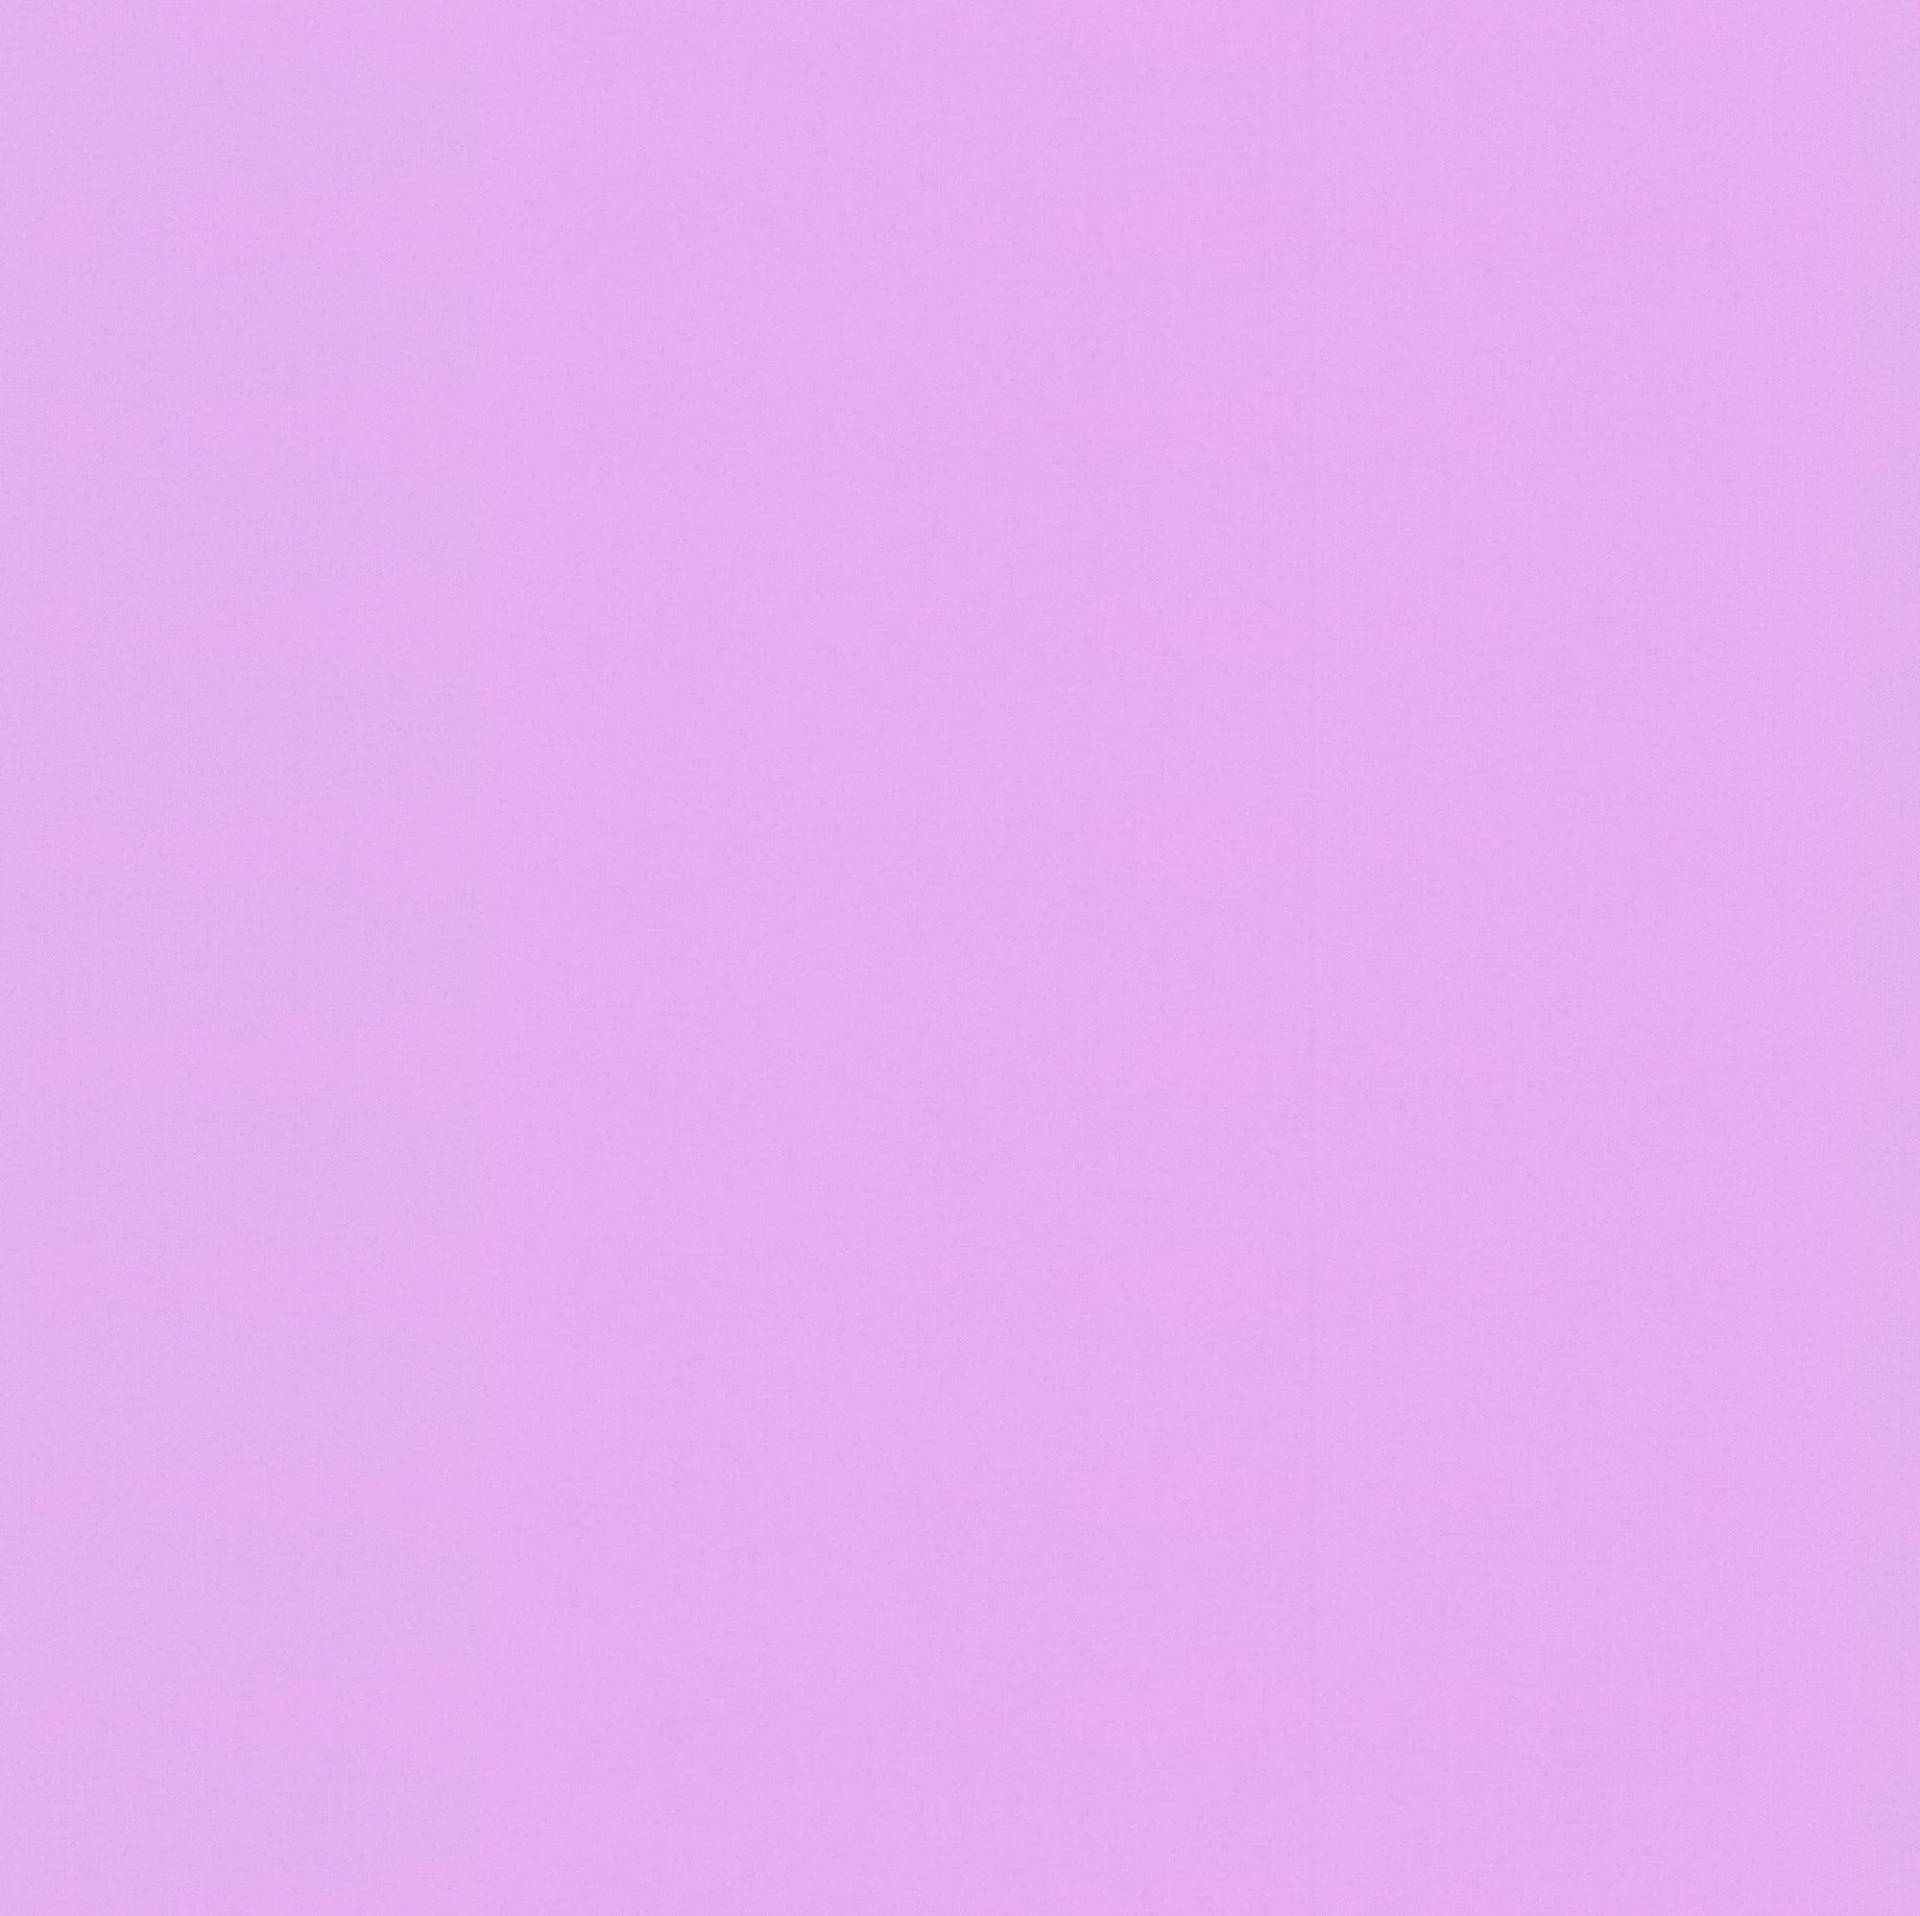 Download Pinkish Plain Purple Wallpaper 